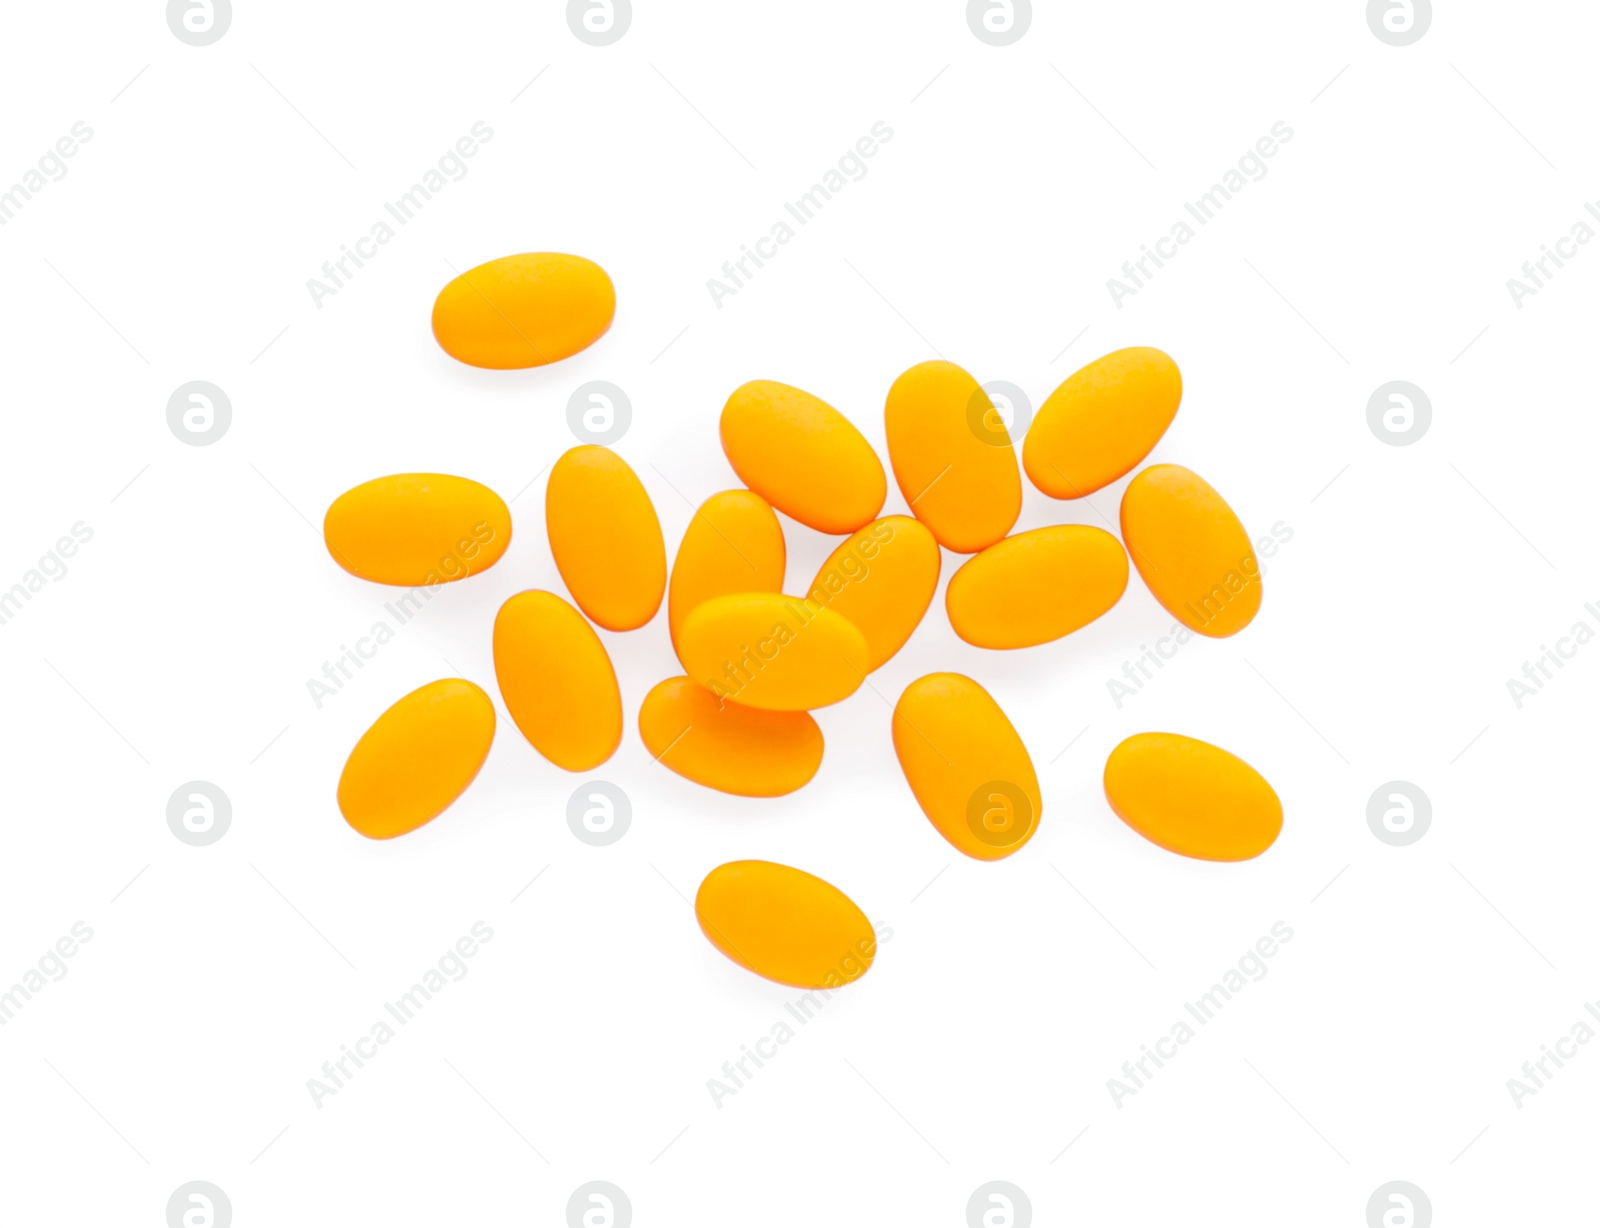 Photo of Tasty orange dragee candies on white background, top view